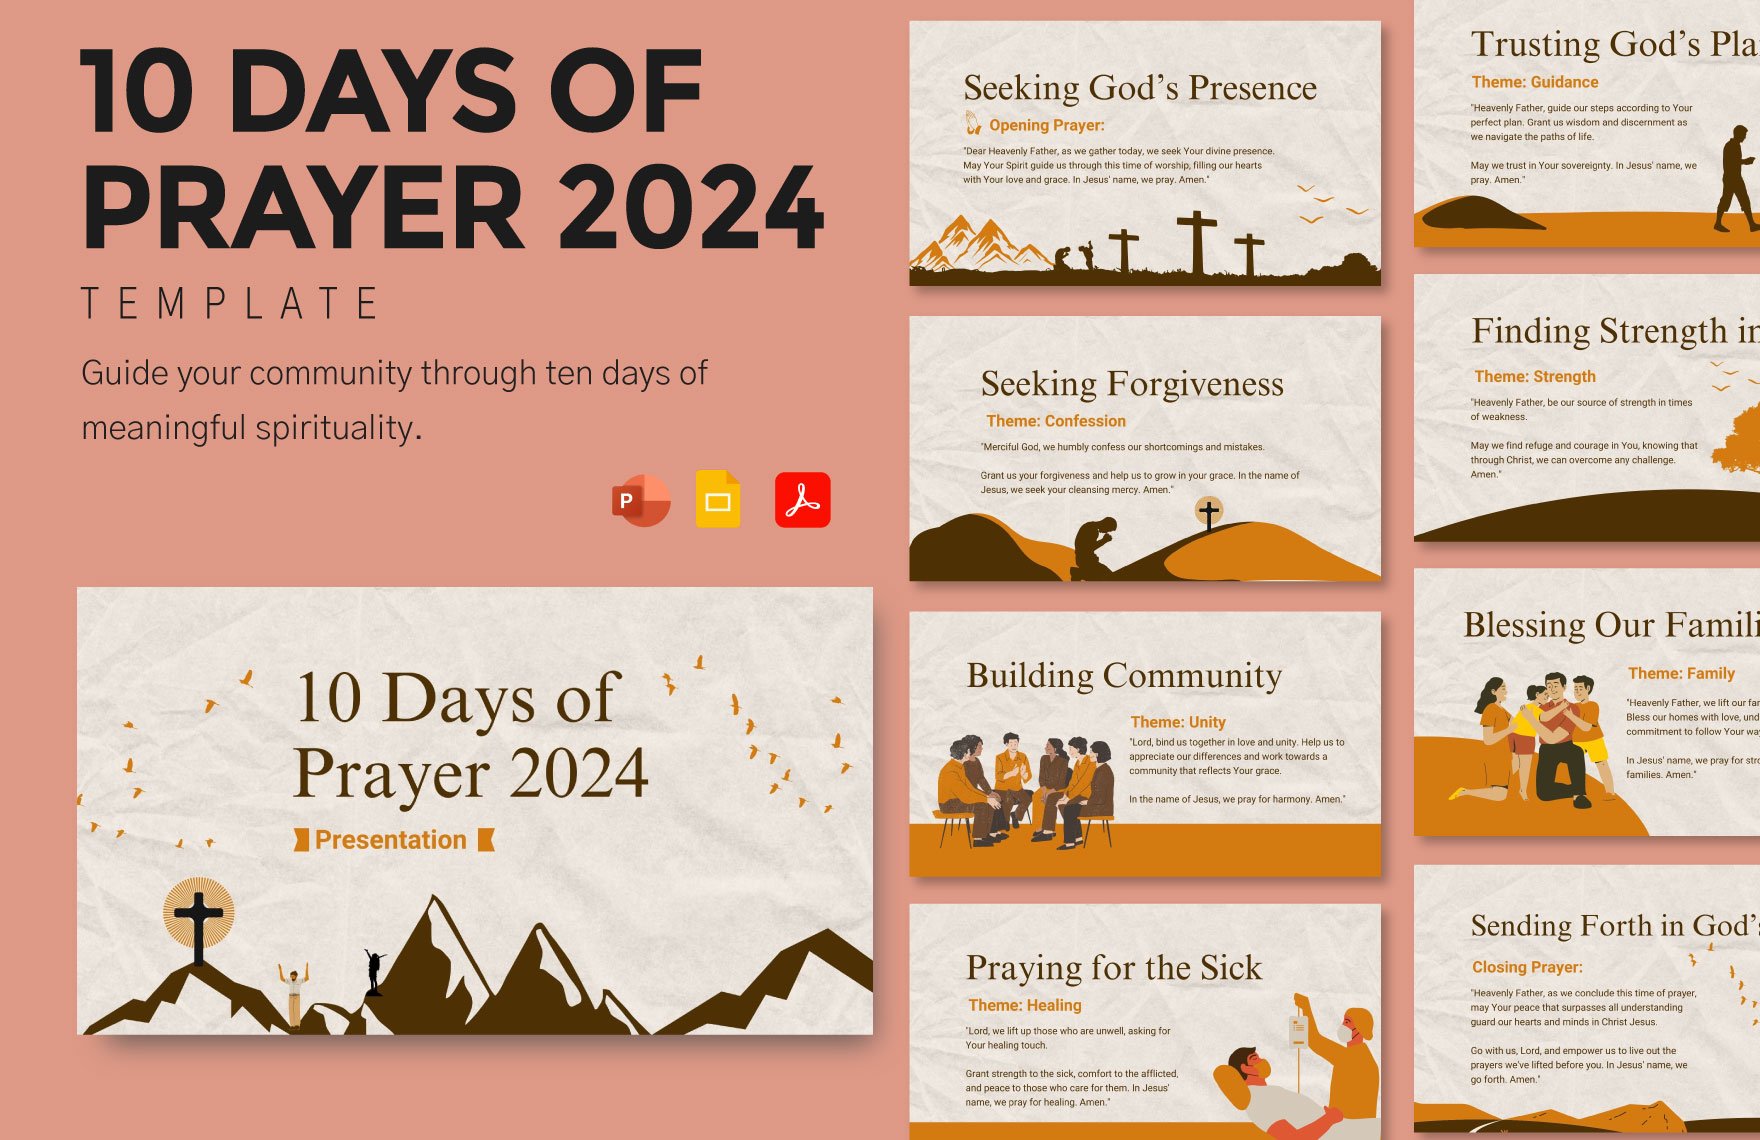 10 Days of Prayer 2024 Template